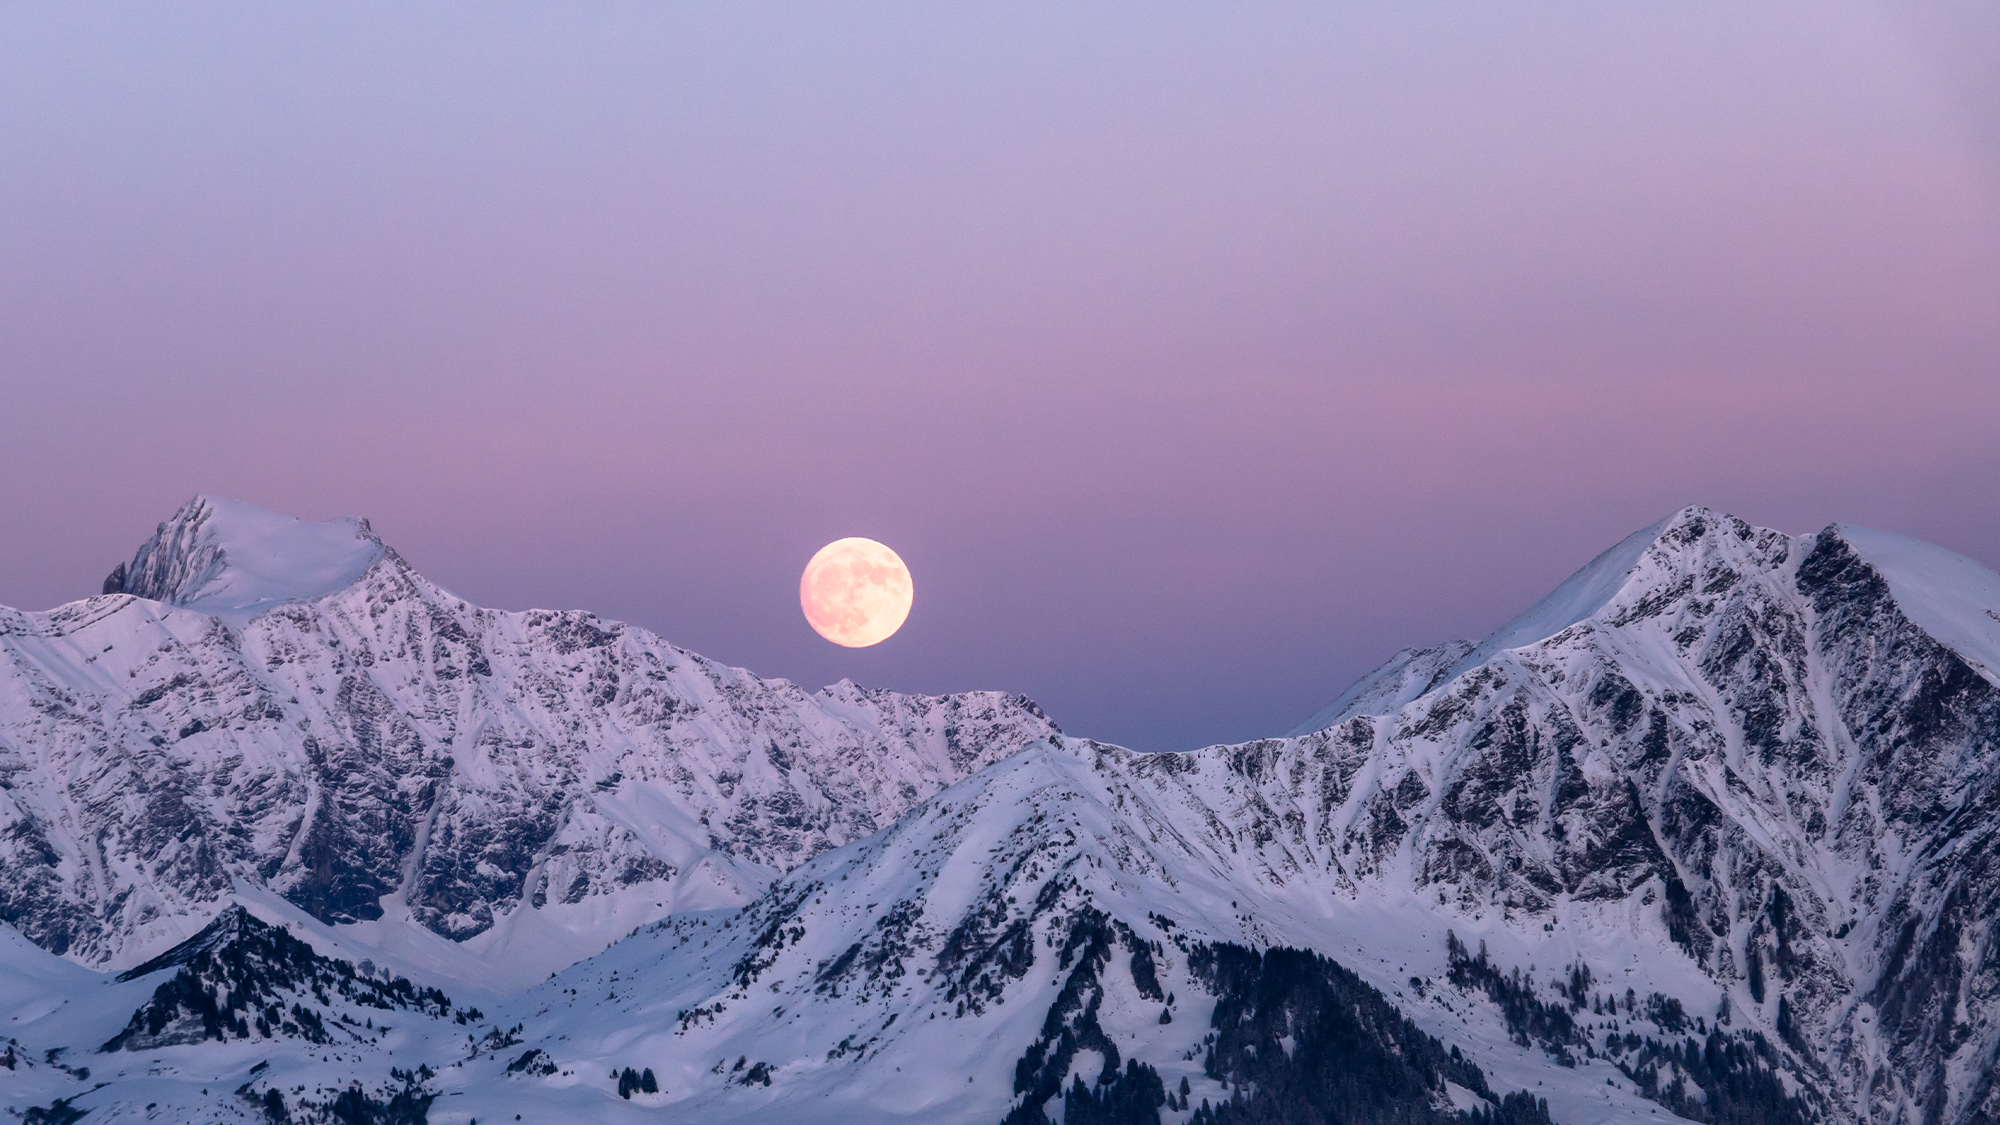 A full moon rises n a purple sky over snowy mountain peaks.